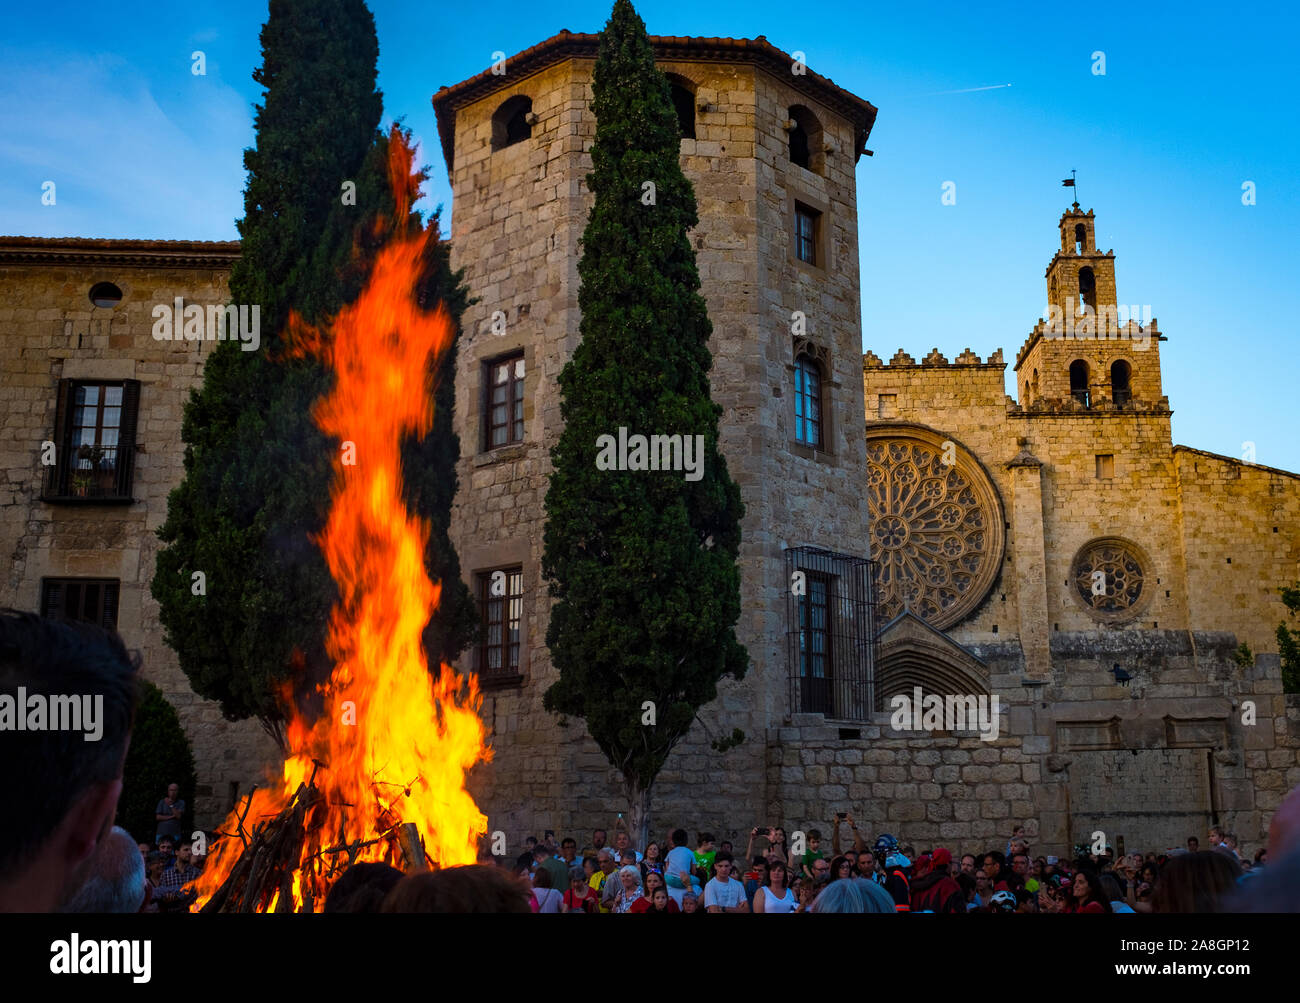 Saint John's Night Celebration 23 June 2019 - The Catalan Festival of Fire. Revetlla de Sant Joan -  Bonfire of Sant Joan - Fogueres de Sant Joan -  P Stock Photo